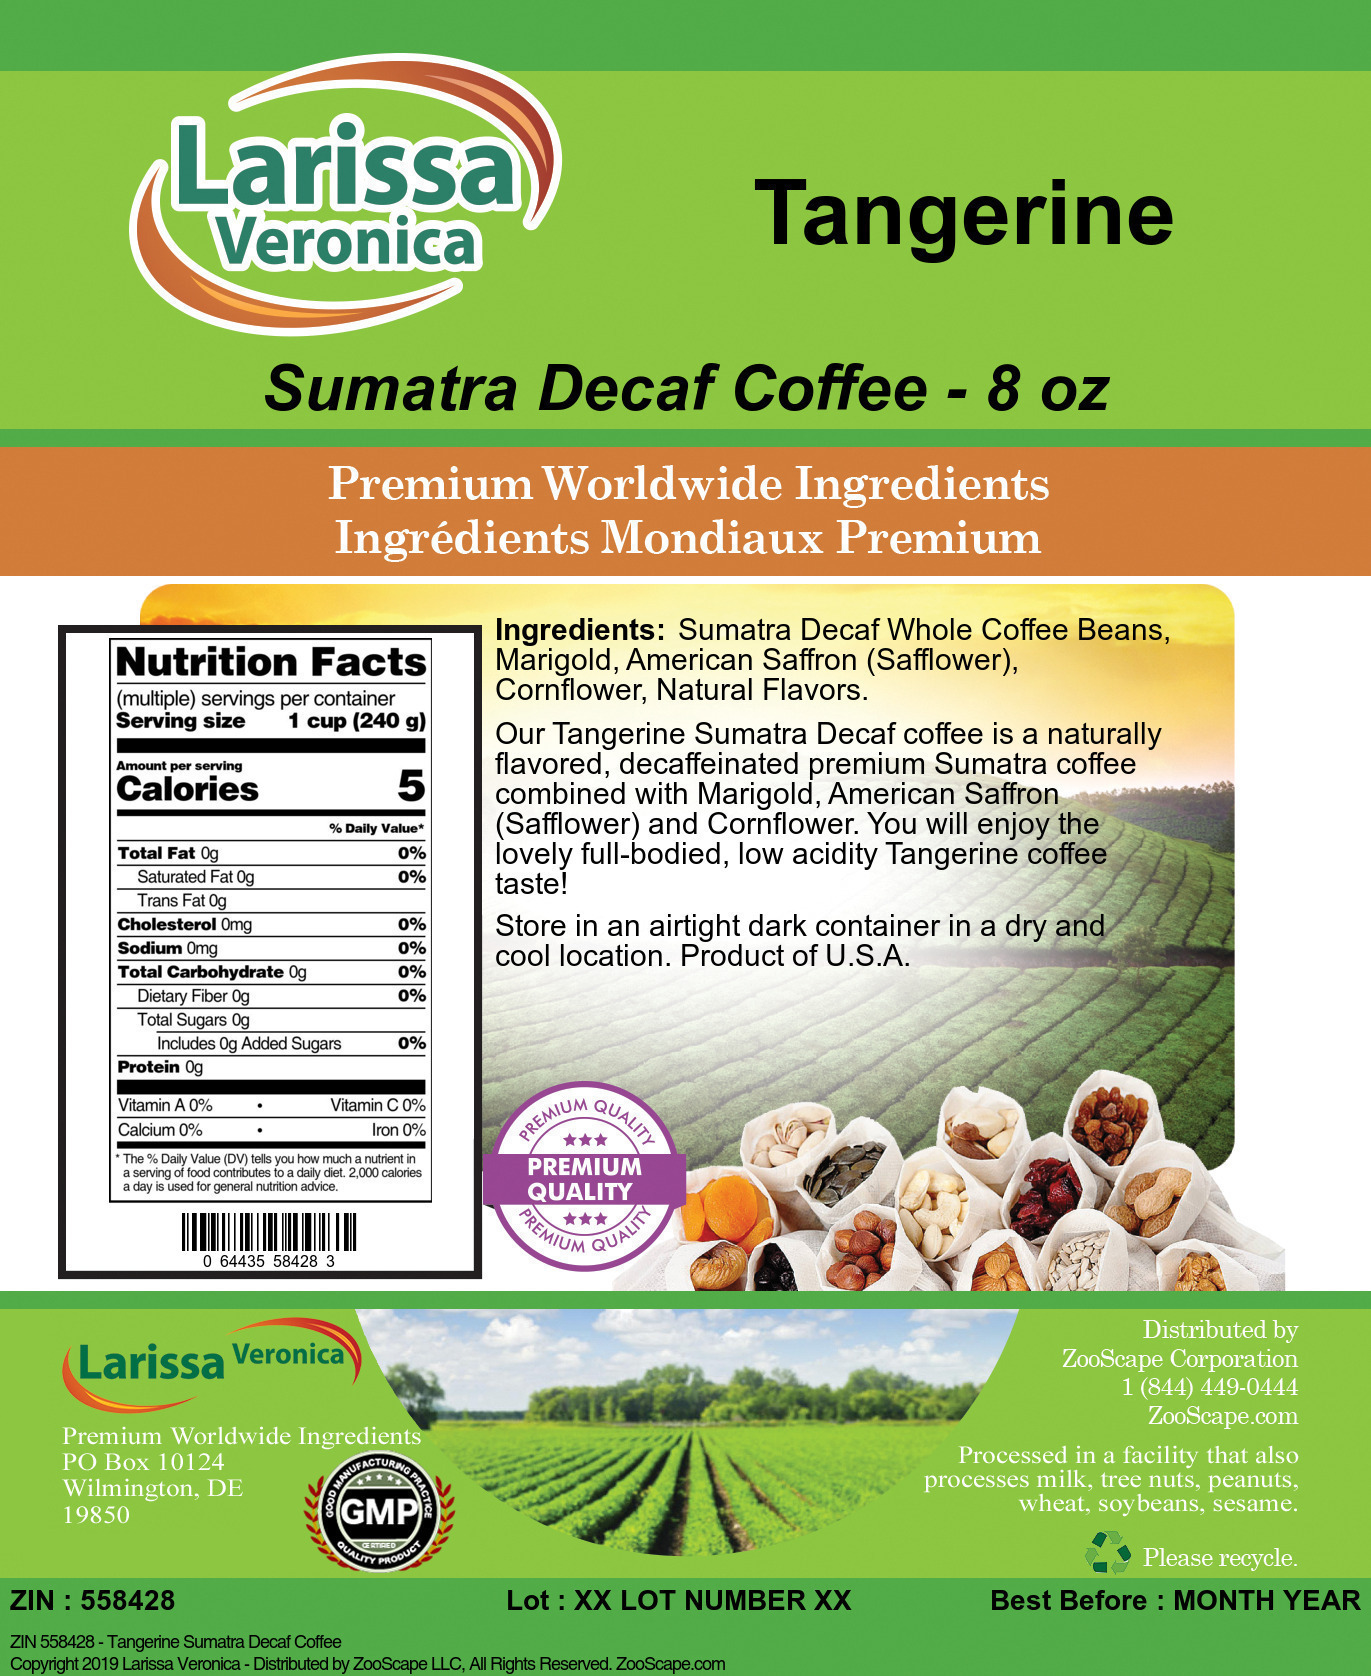 Tangerine Sumatra Decaf Coffee - Label